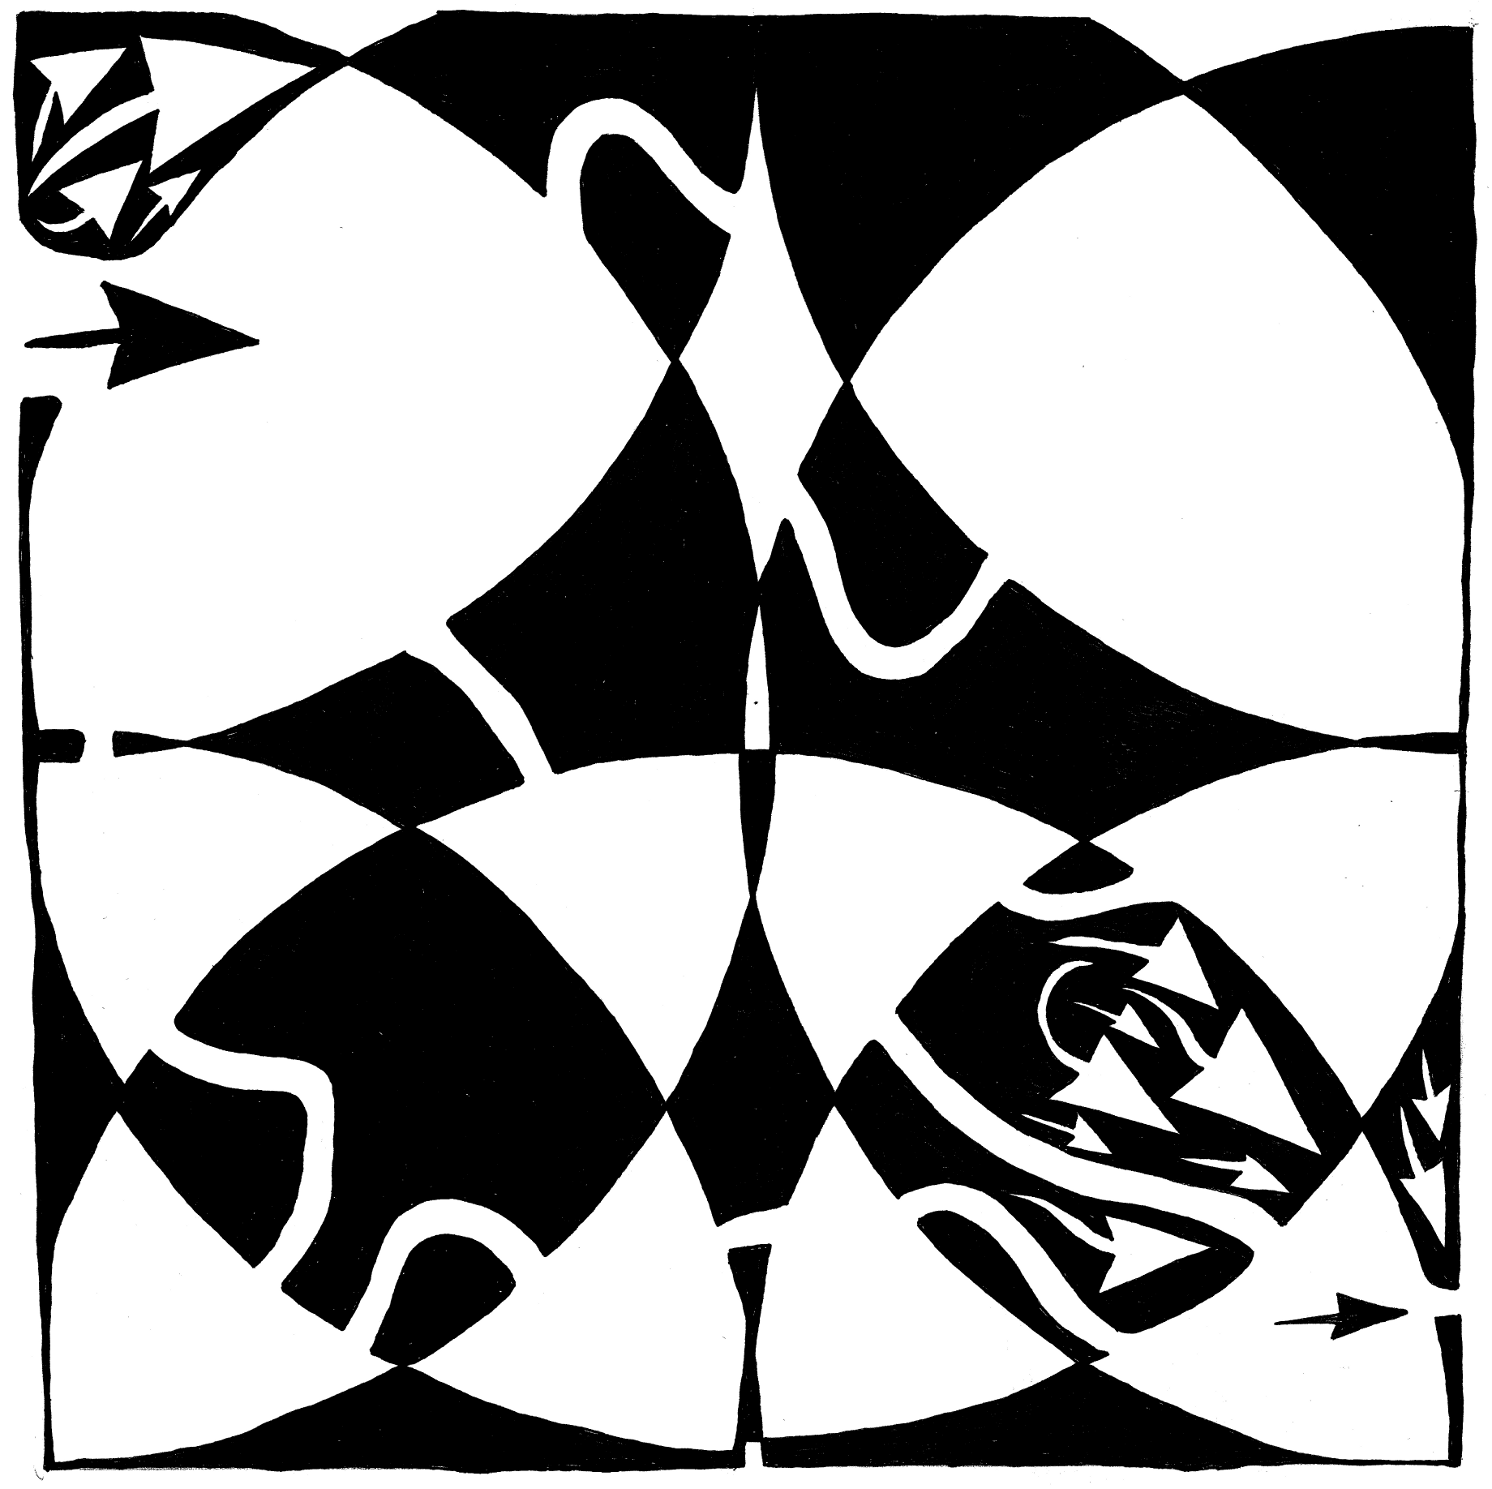 Rorschach maze art by Yonatan Frimer